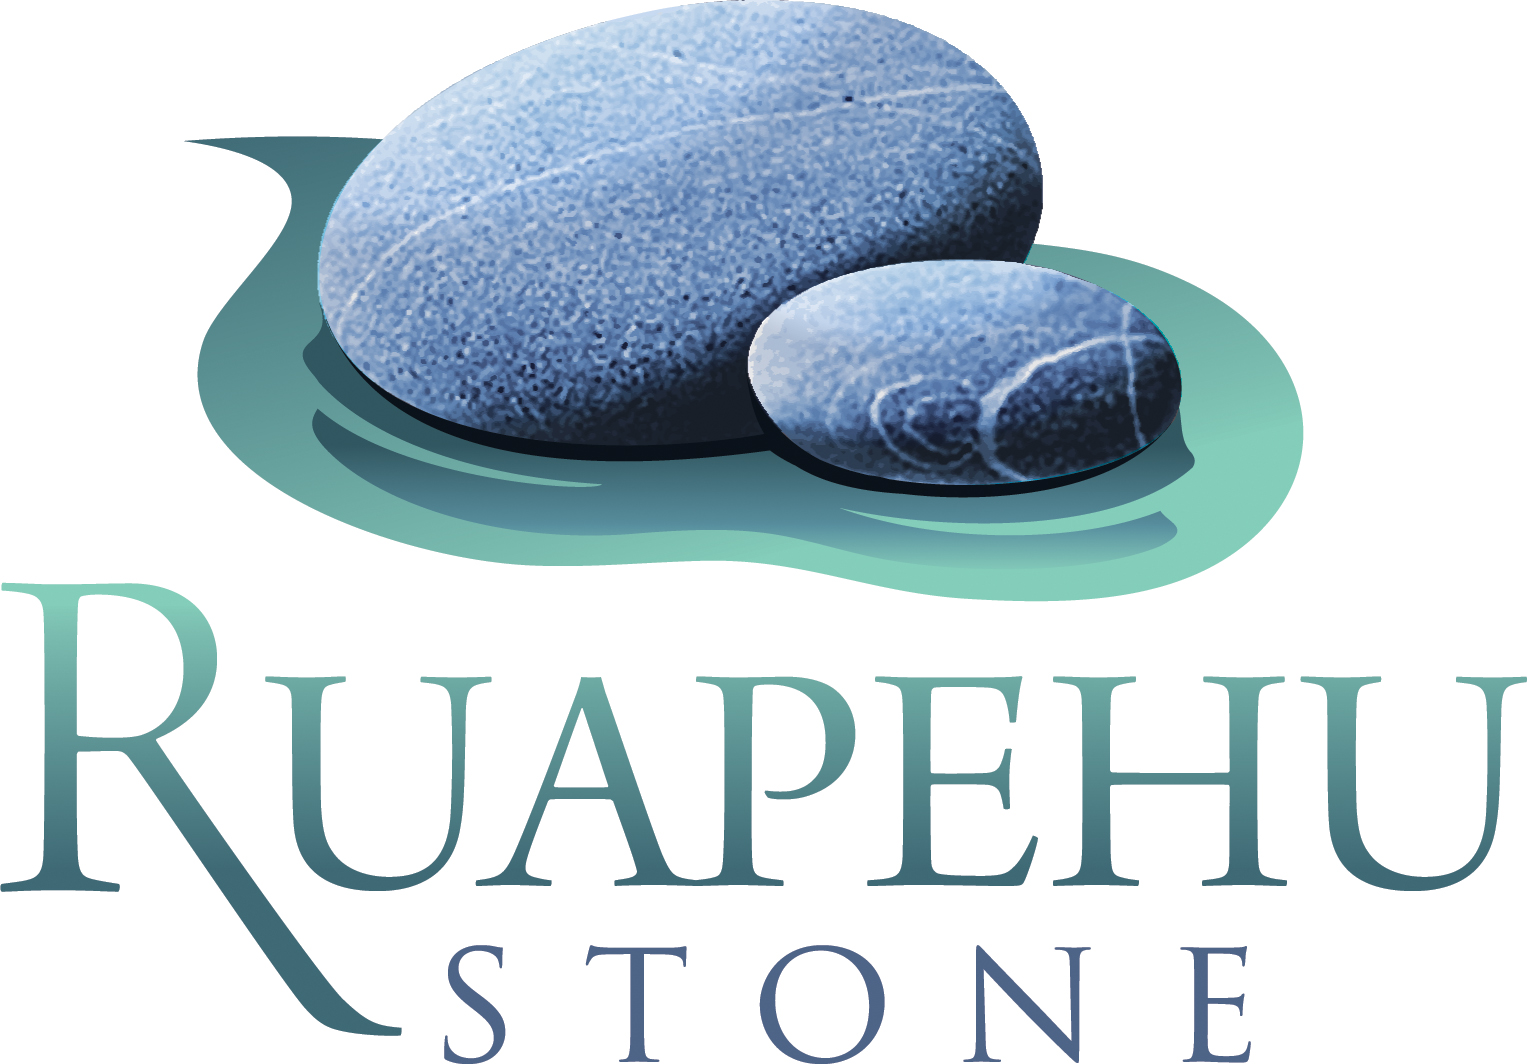 Логотип stone. Логотип камешки. Логотип натуральный камень. Искусственный камень логотип. Логотип мастерская камня.